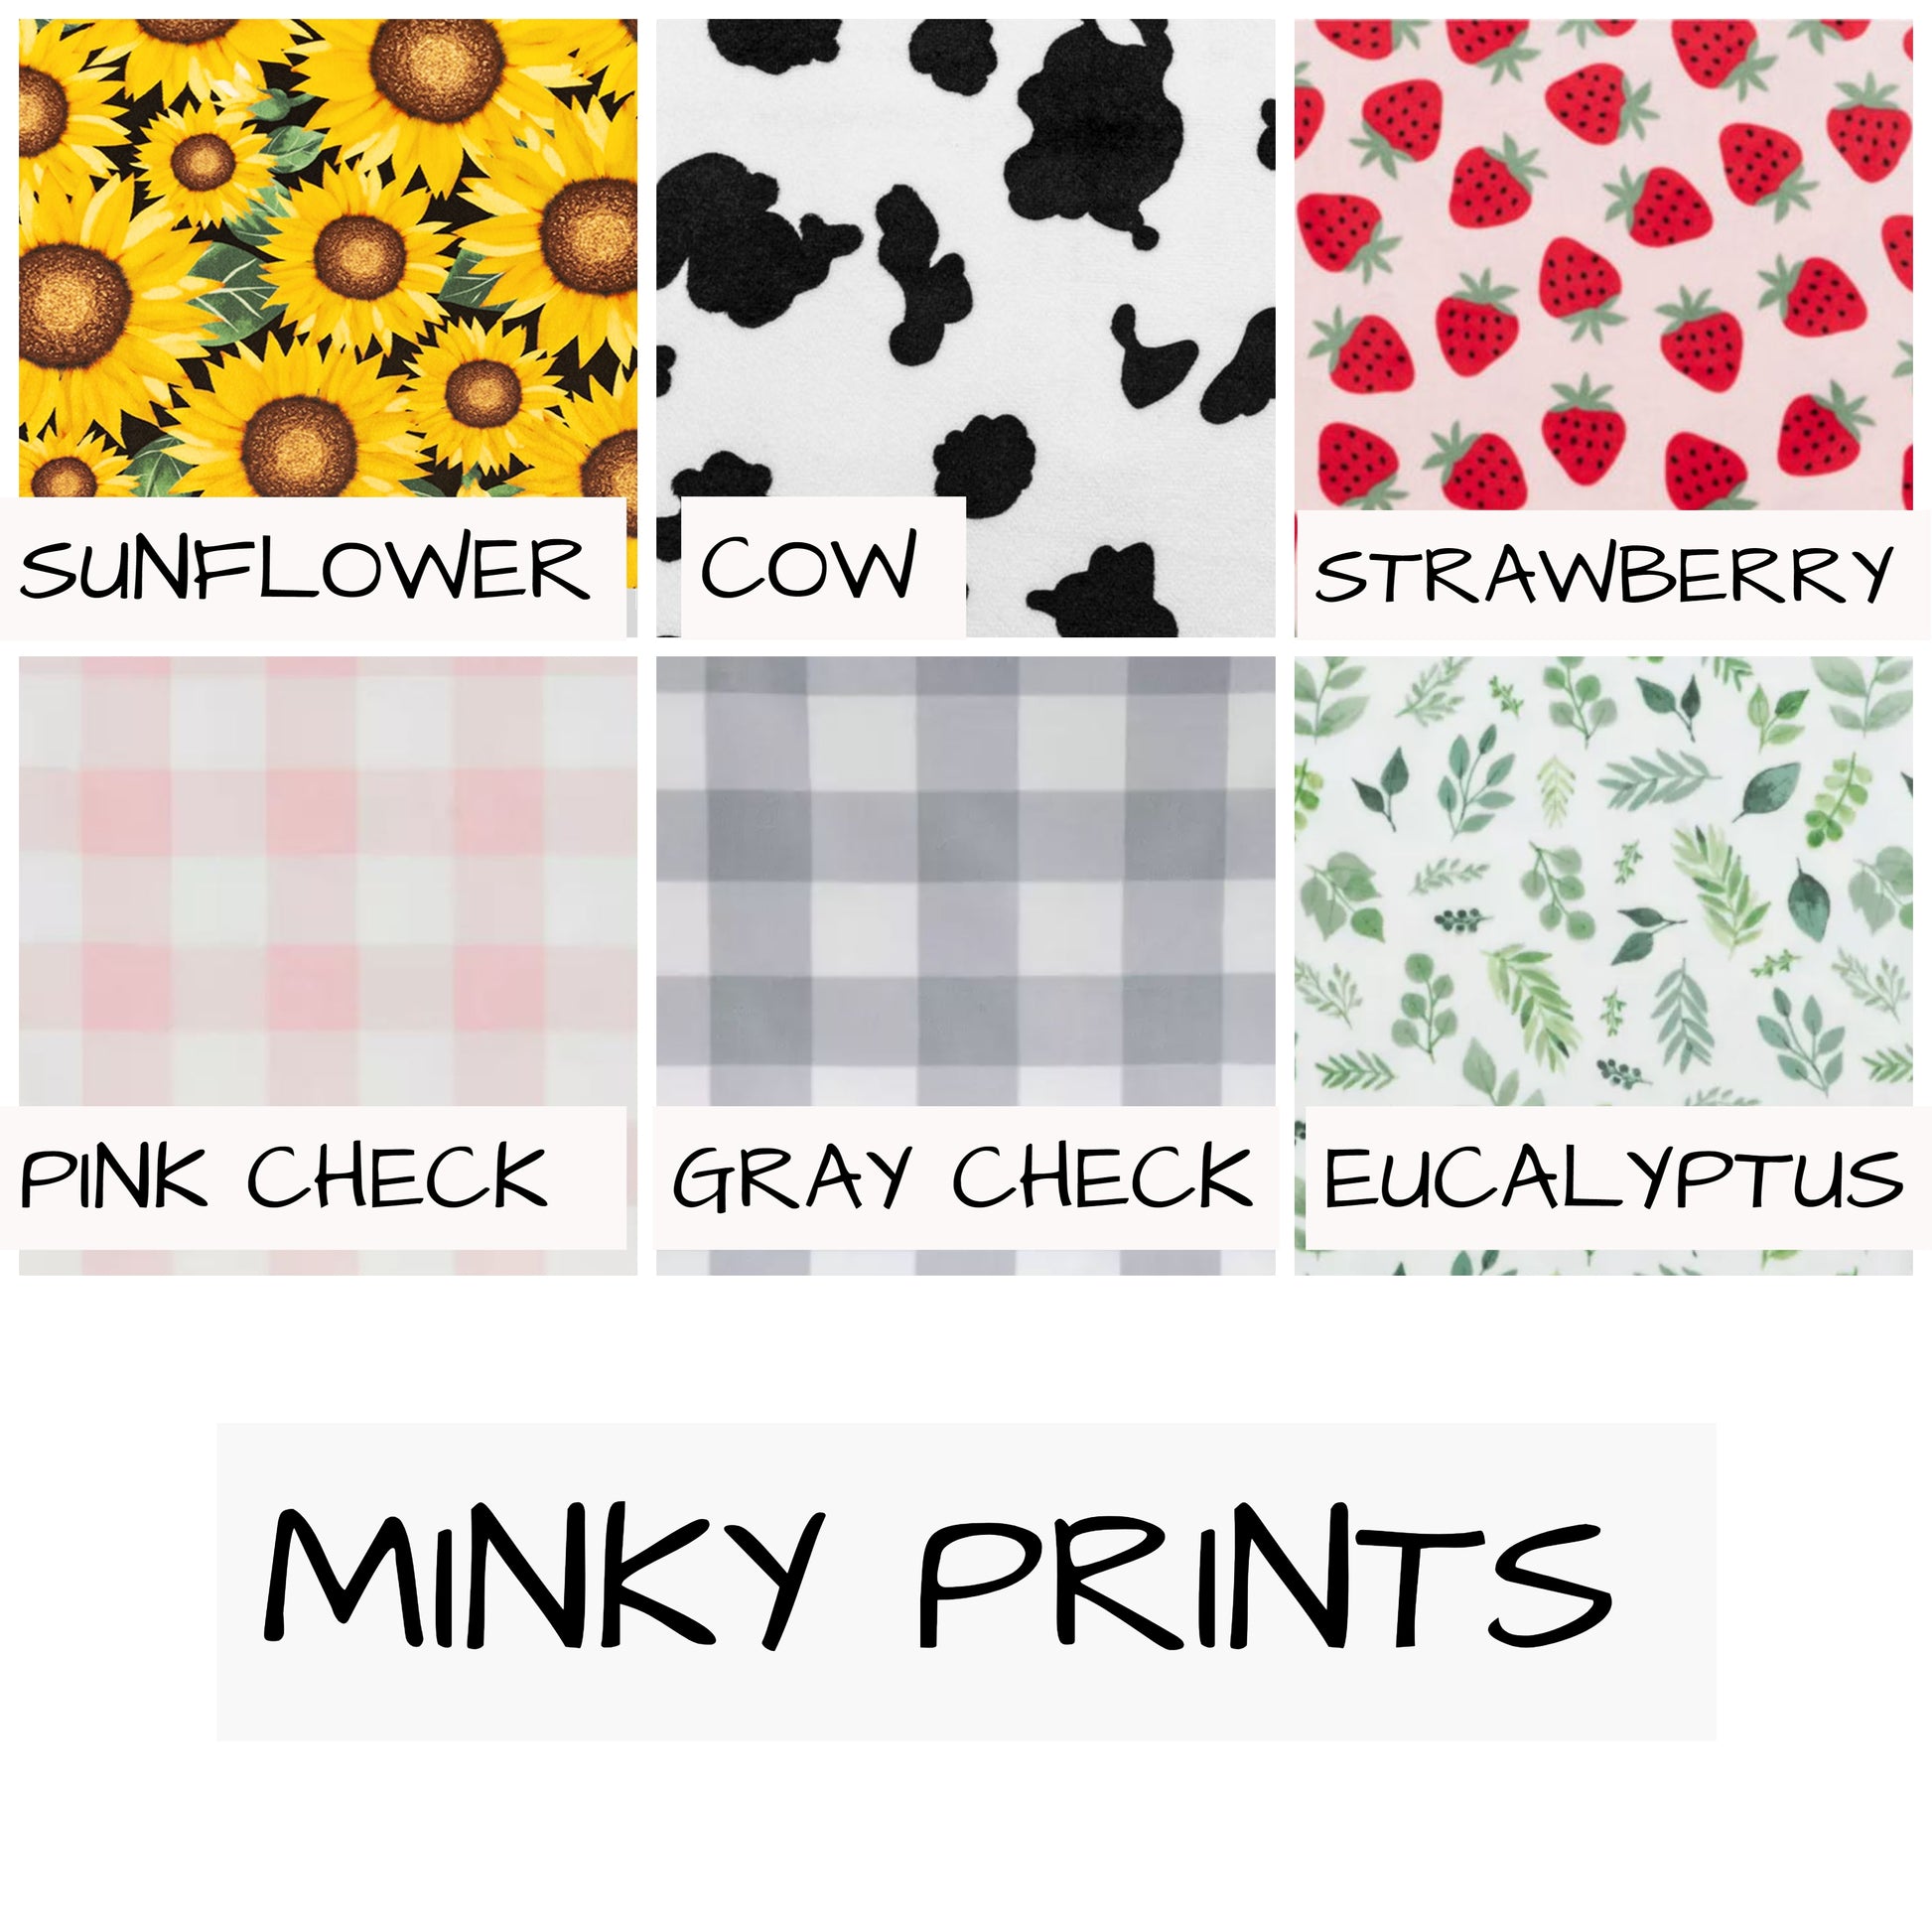 minky prints available